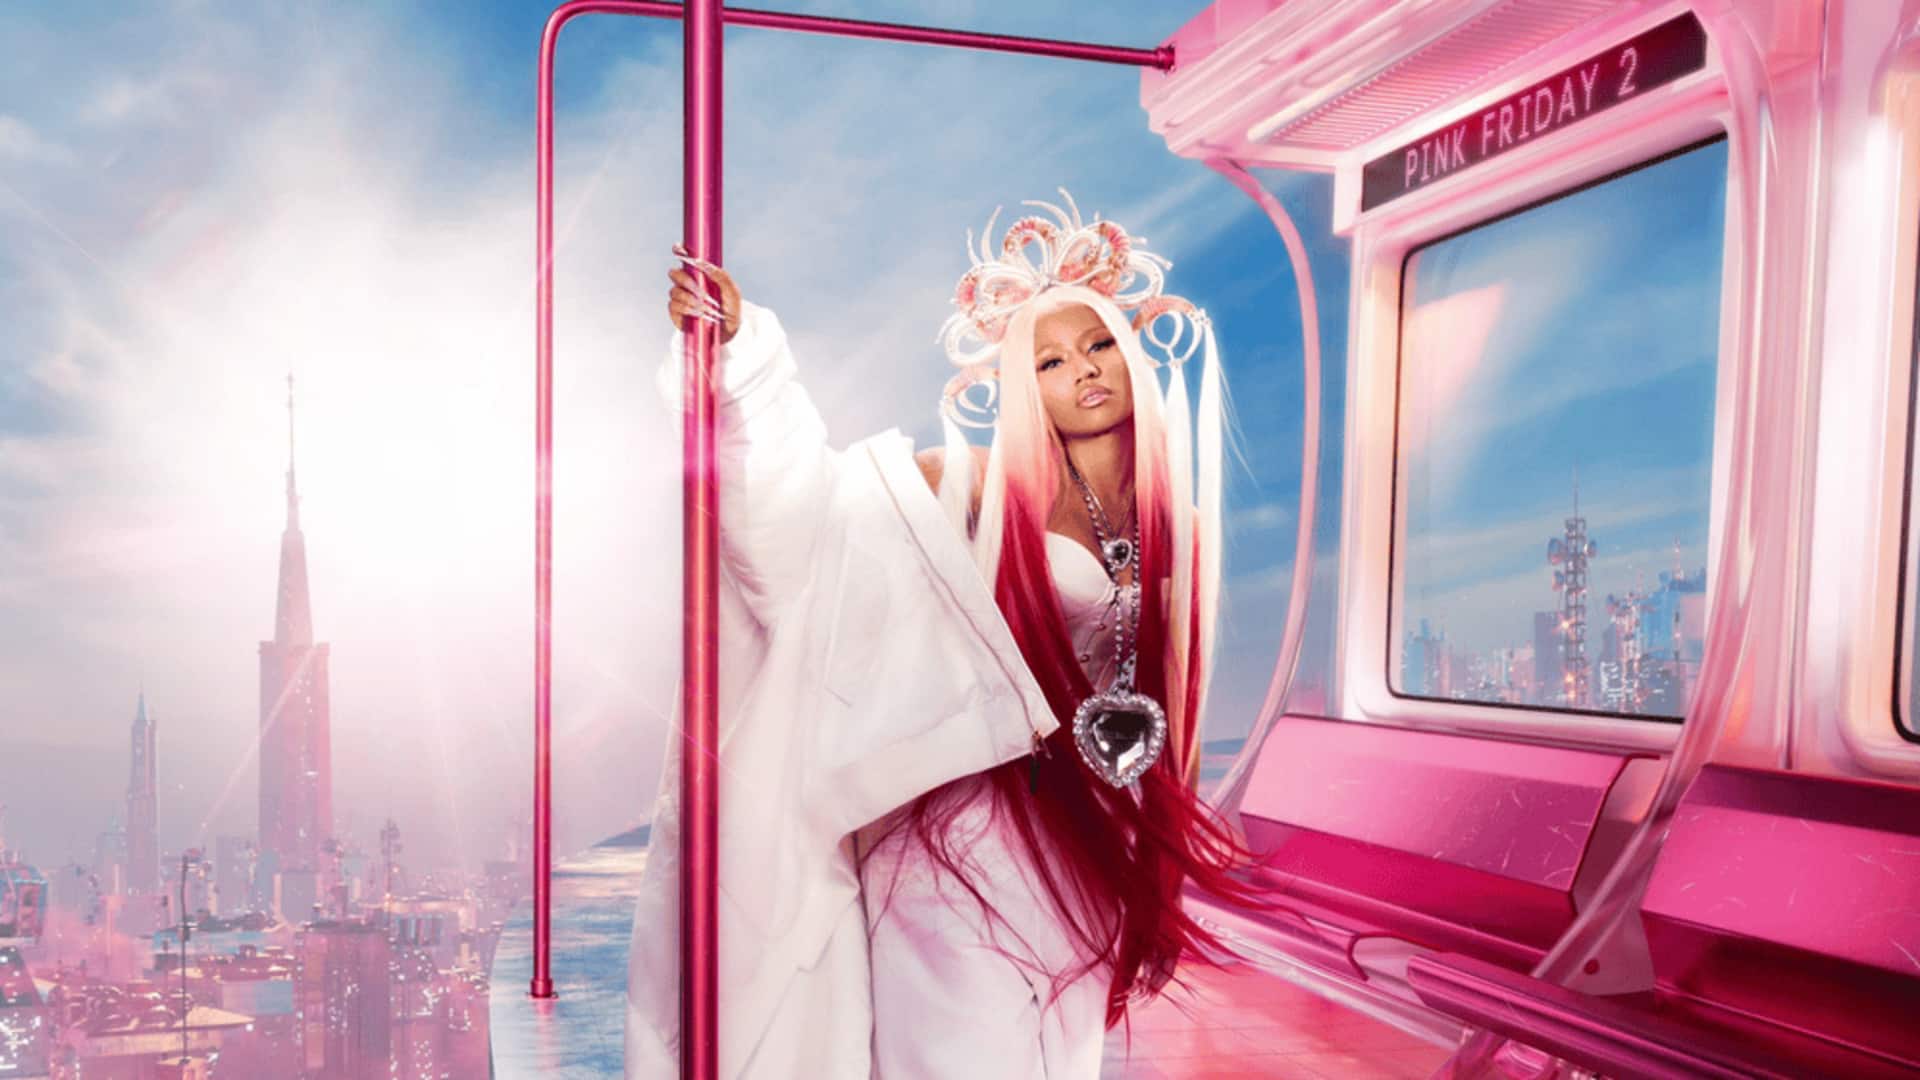 'Pink Friday 2': Nicki Minaj releases album; tracklist revealed